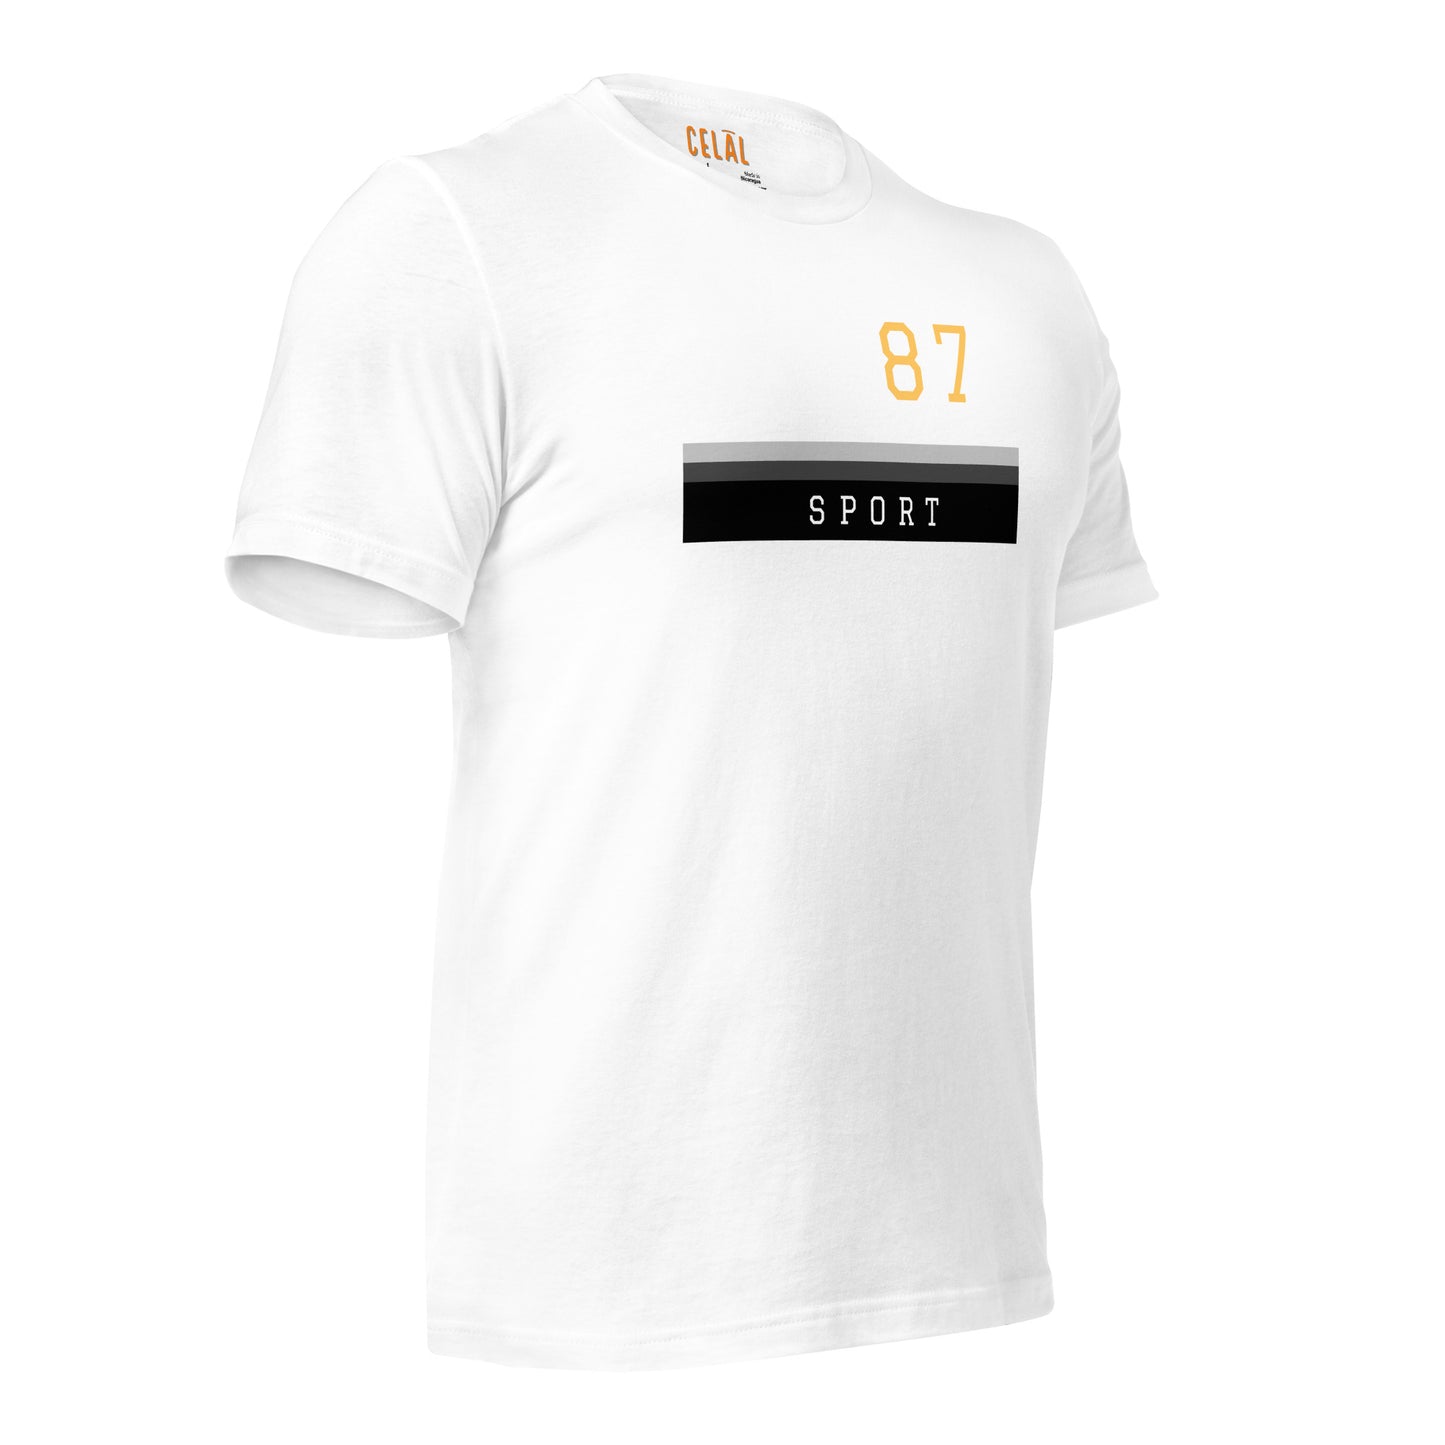 87 Unisex t-shirt